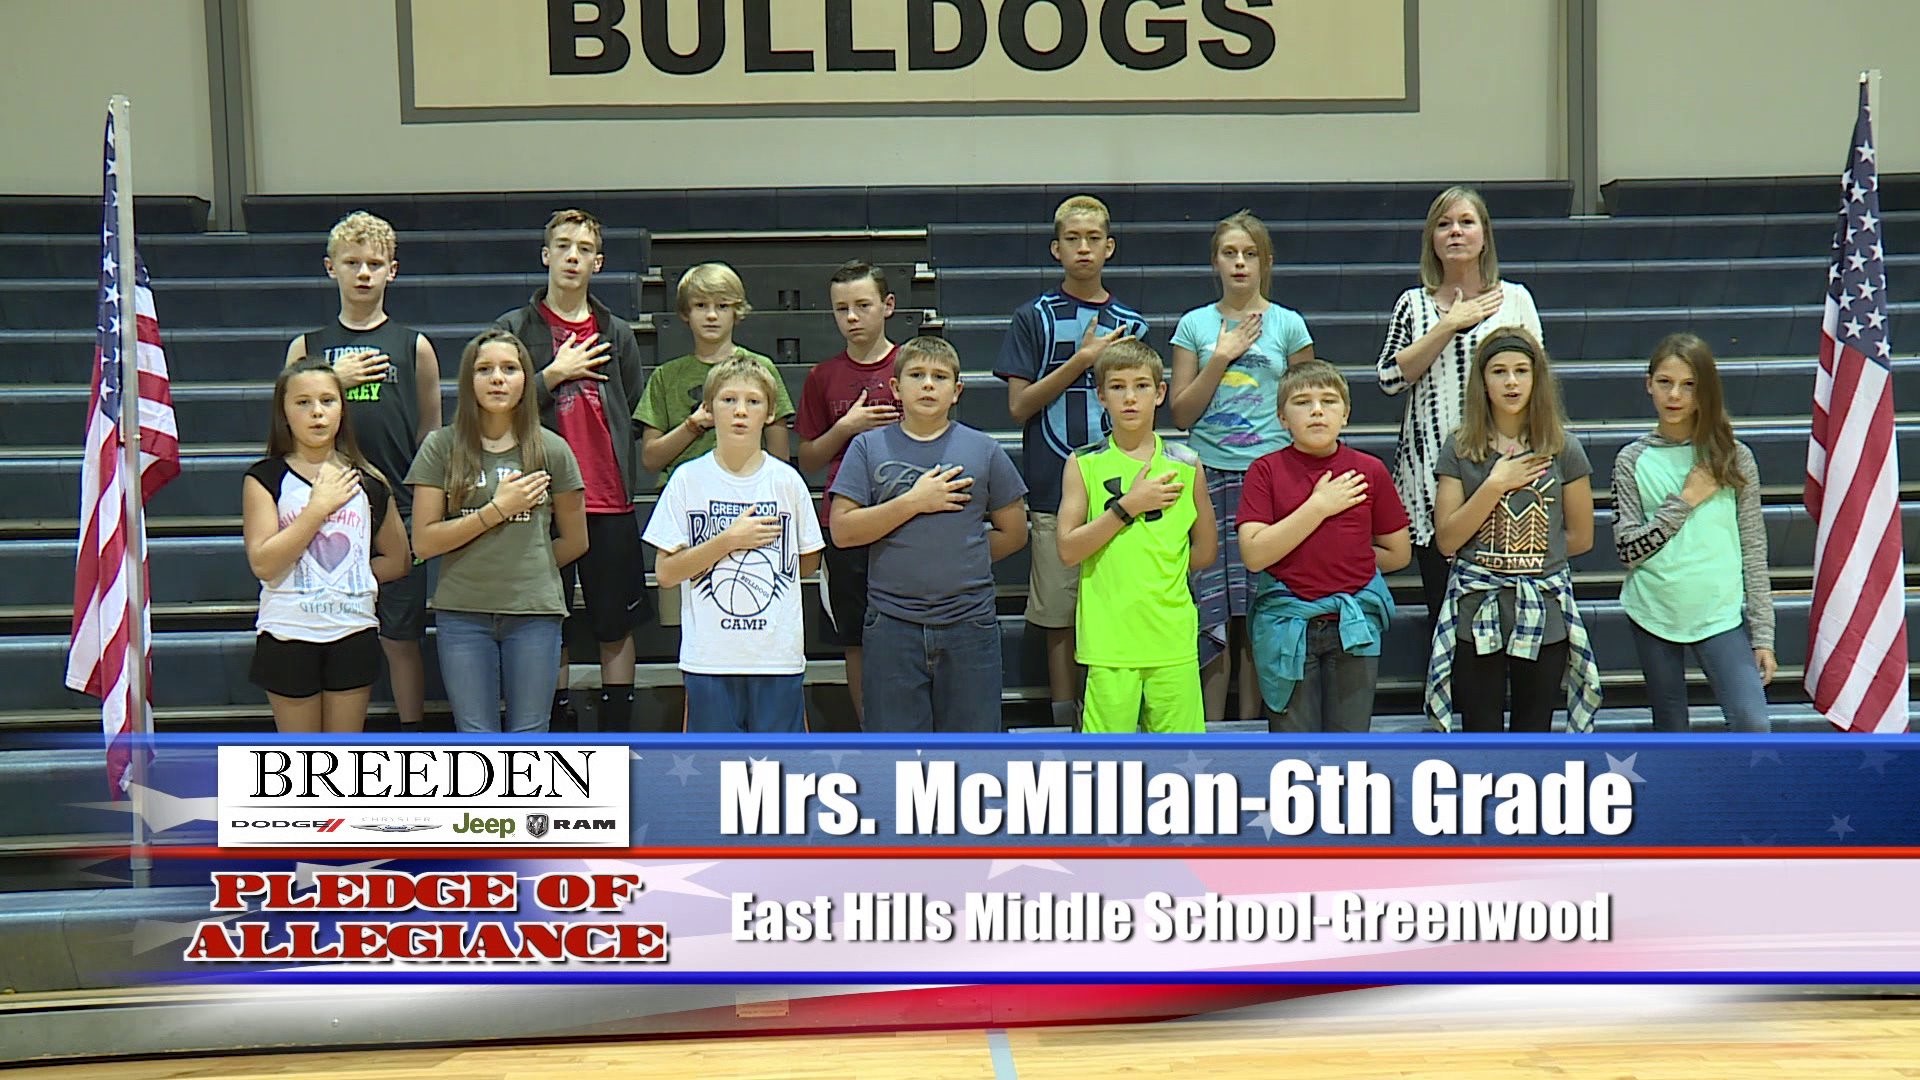 Mrs. McMillan  6th Grade  East Hills Middle School  Greenwood